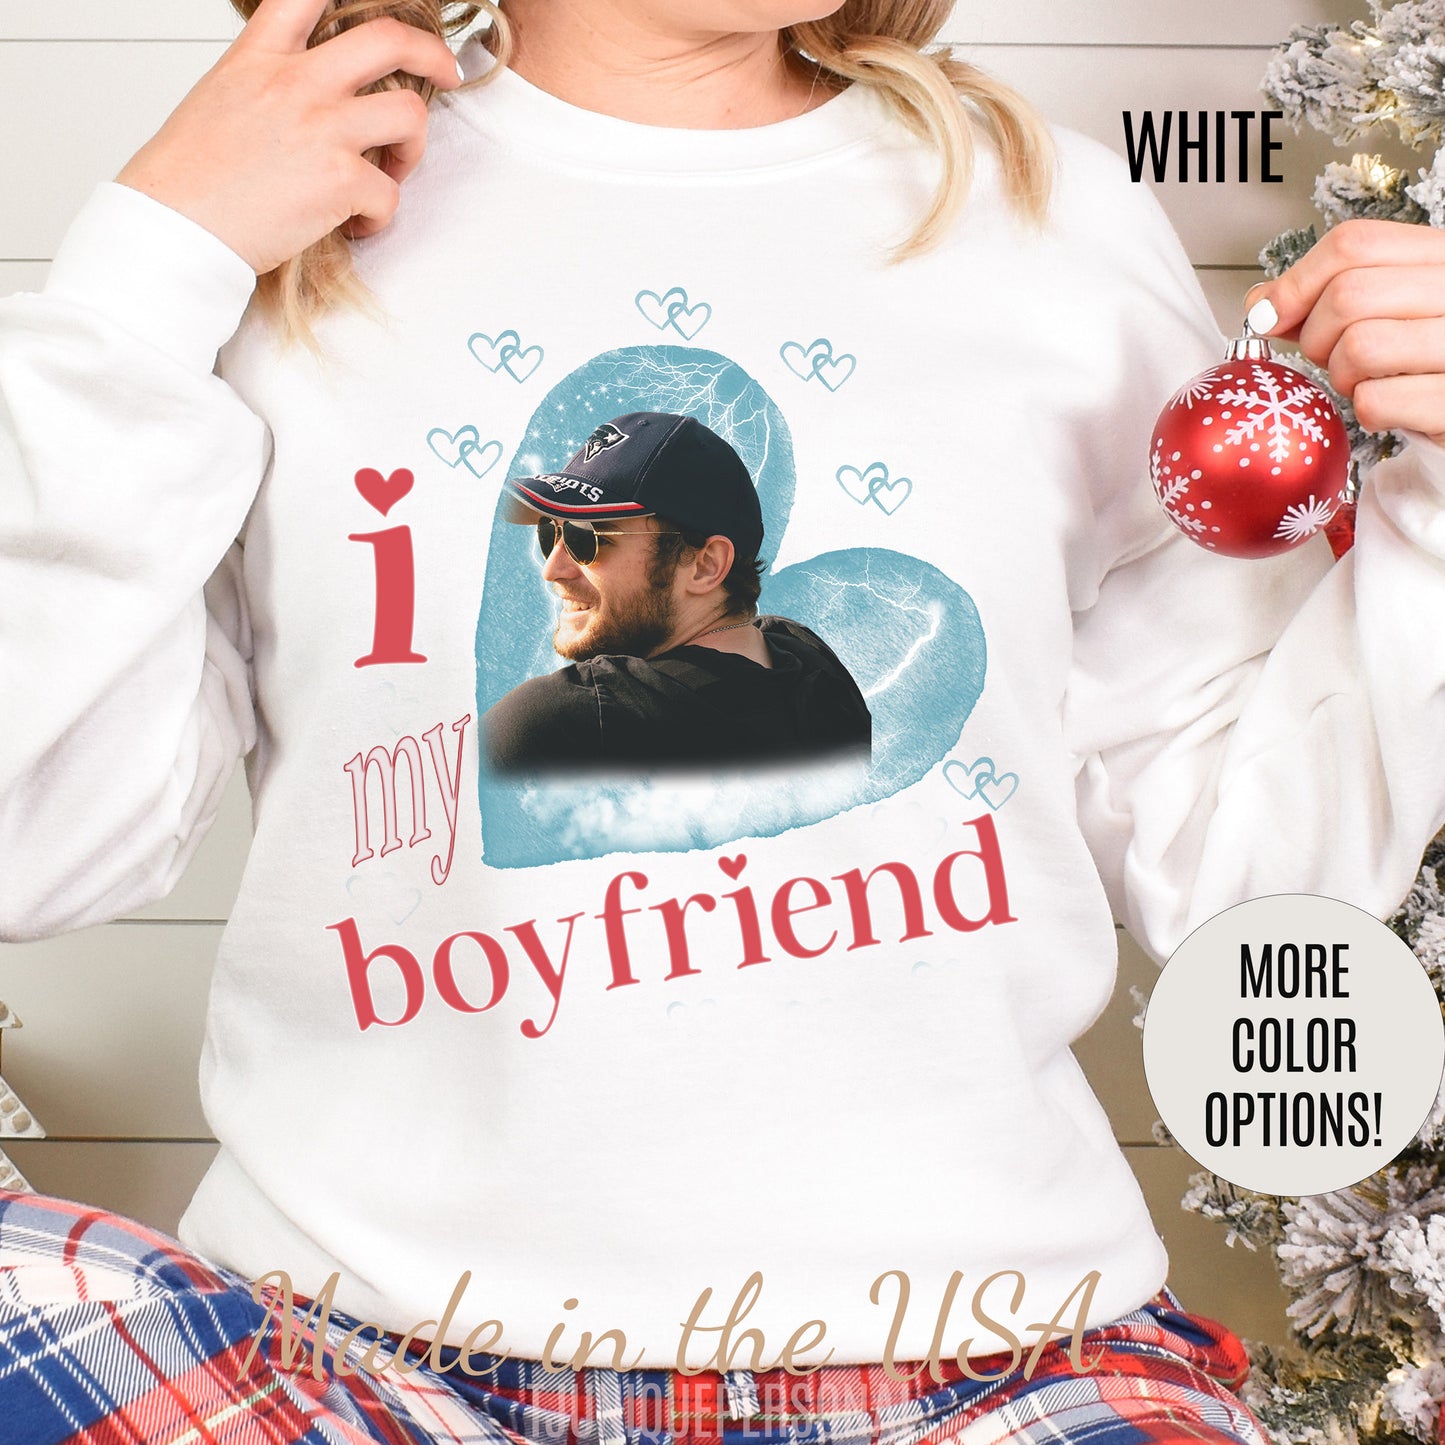 I Love My Boyfriend Sweatshirt Custom Picture, I Love My Boyfriend Custom Photo Sweatshirt , I Love My Boyfriend Sweatshirt Custom, S1343